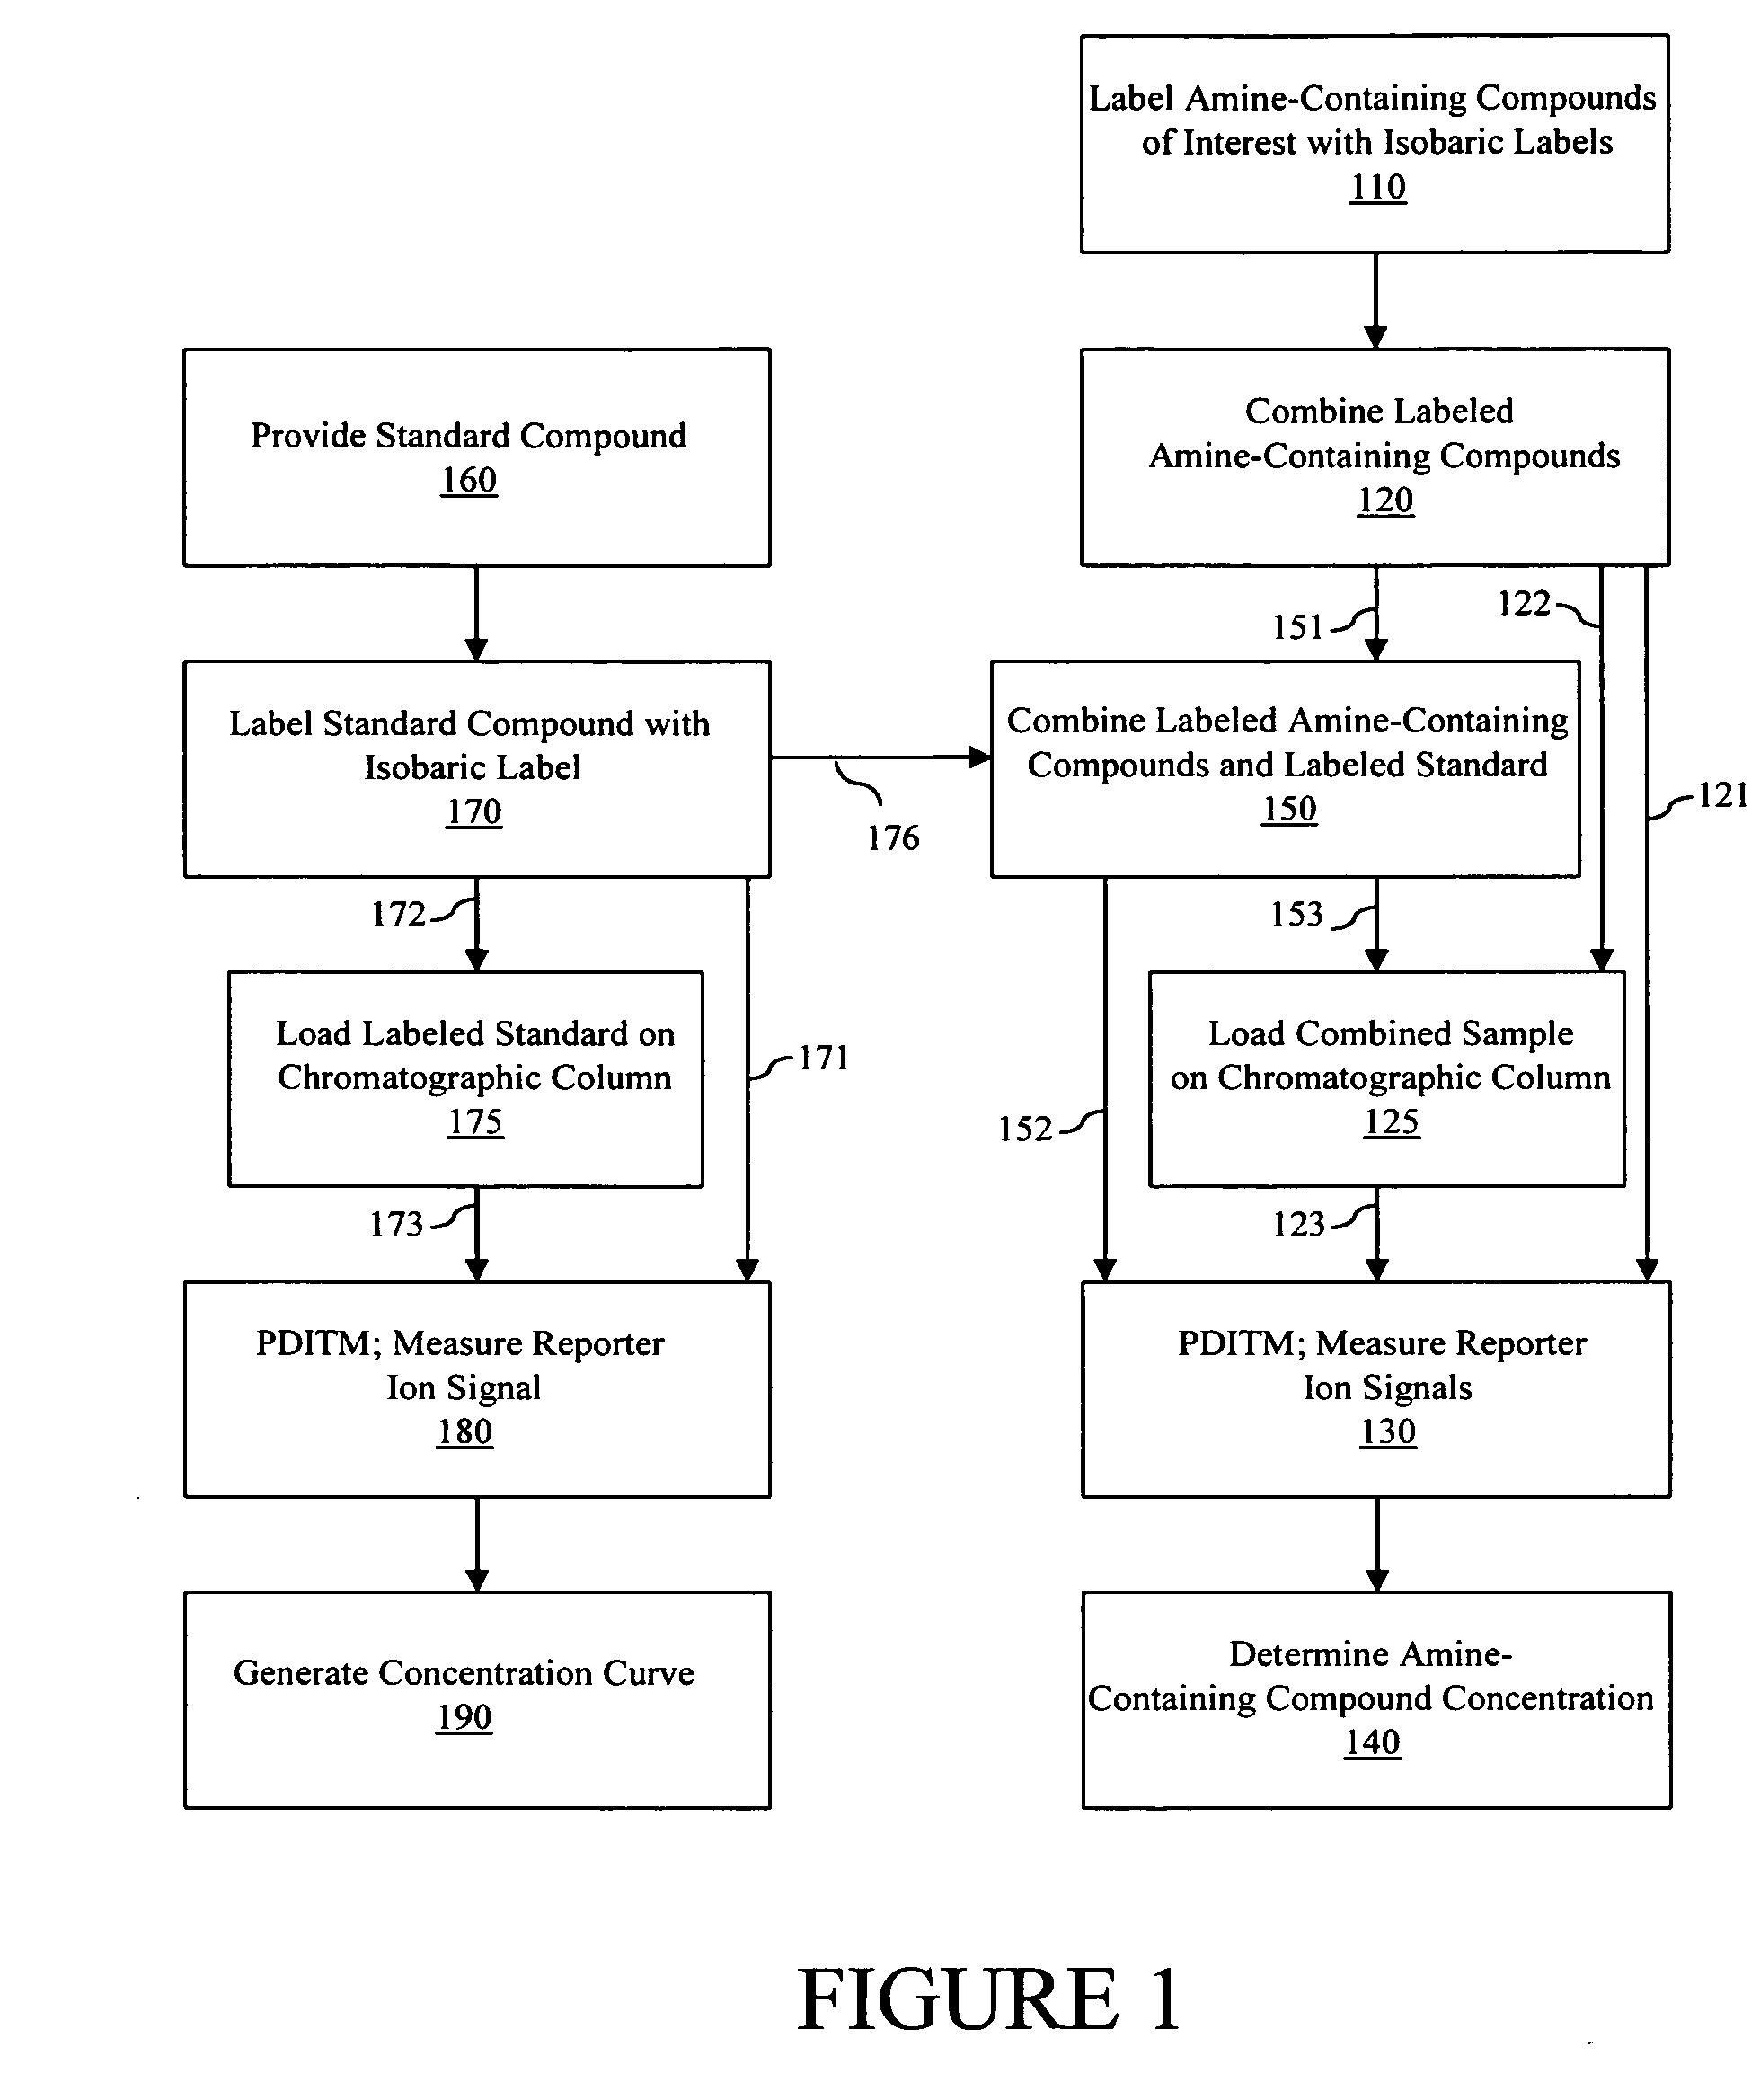 Amine-containing compound analysis methods